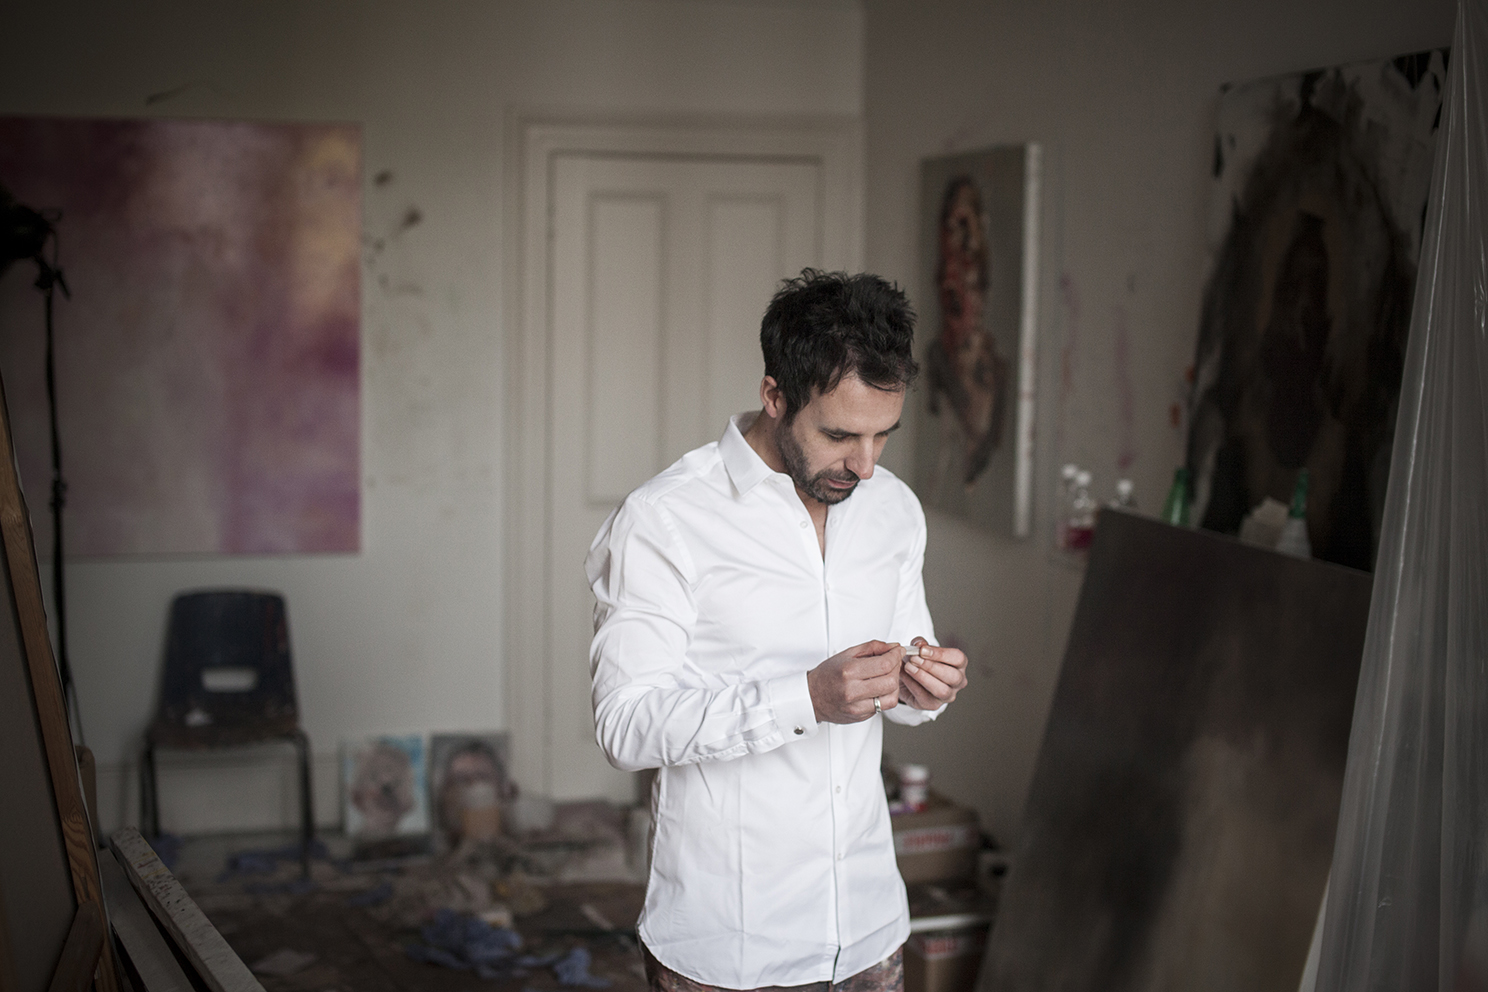 Contemporary artist and painter Antony Micallef